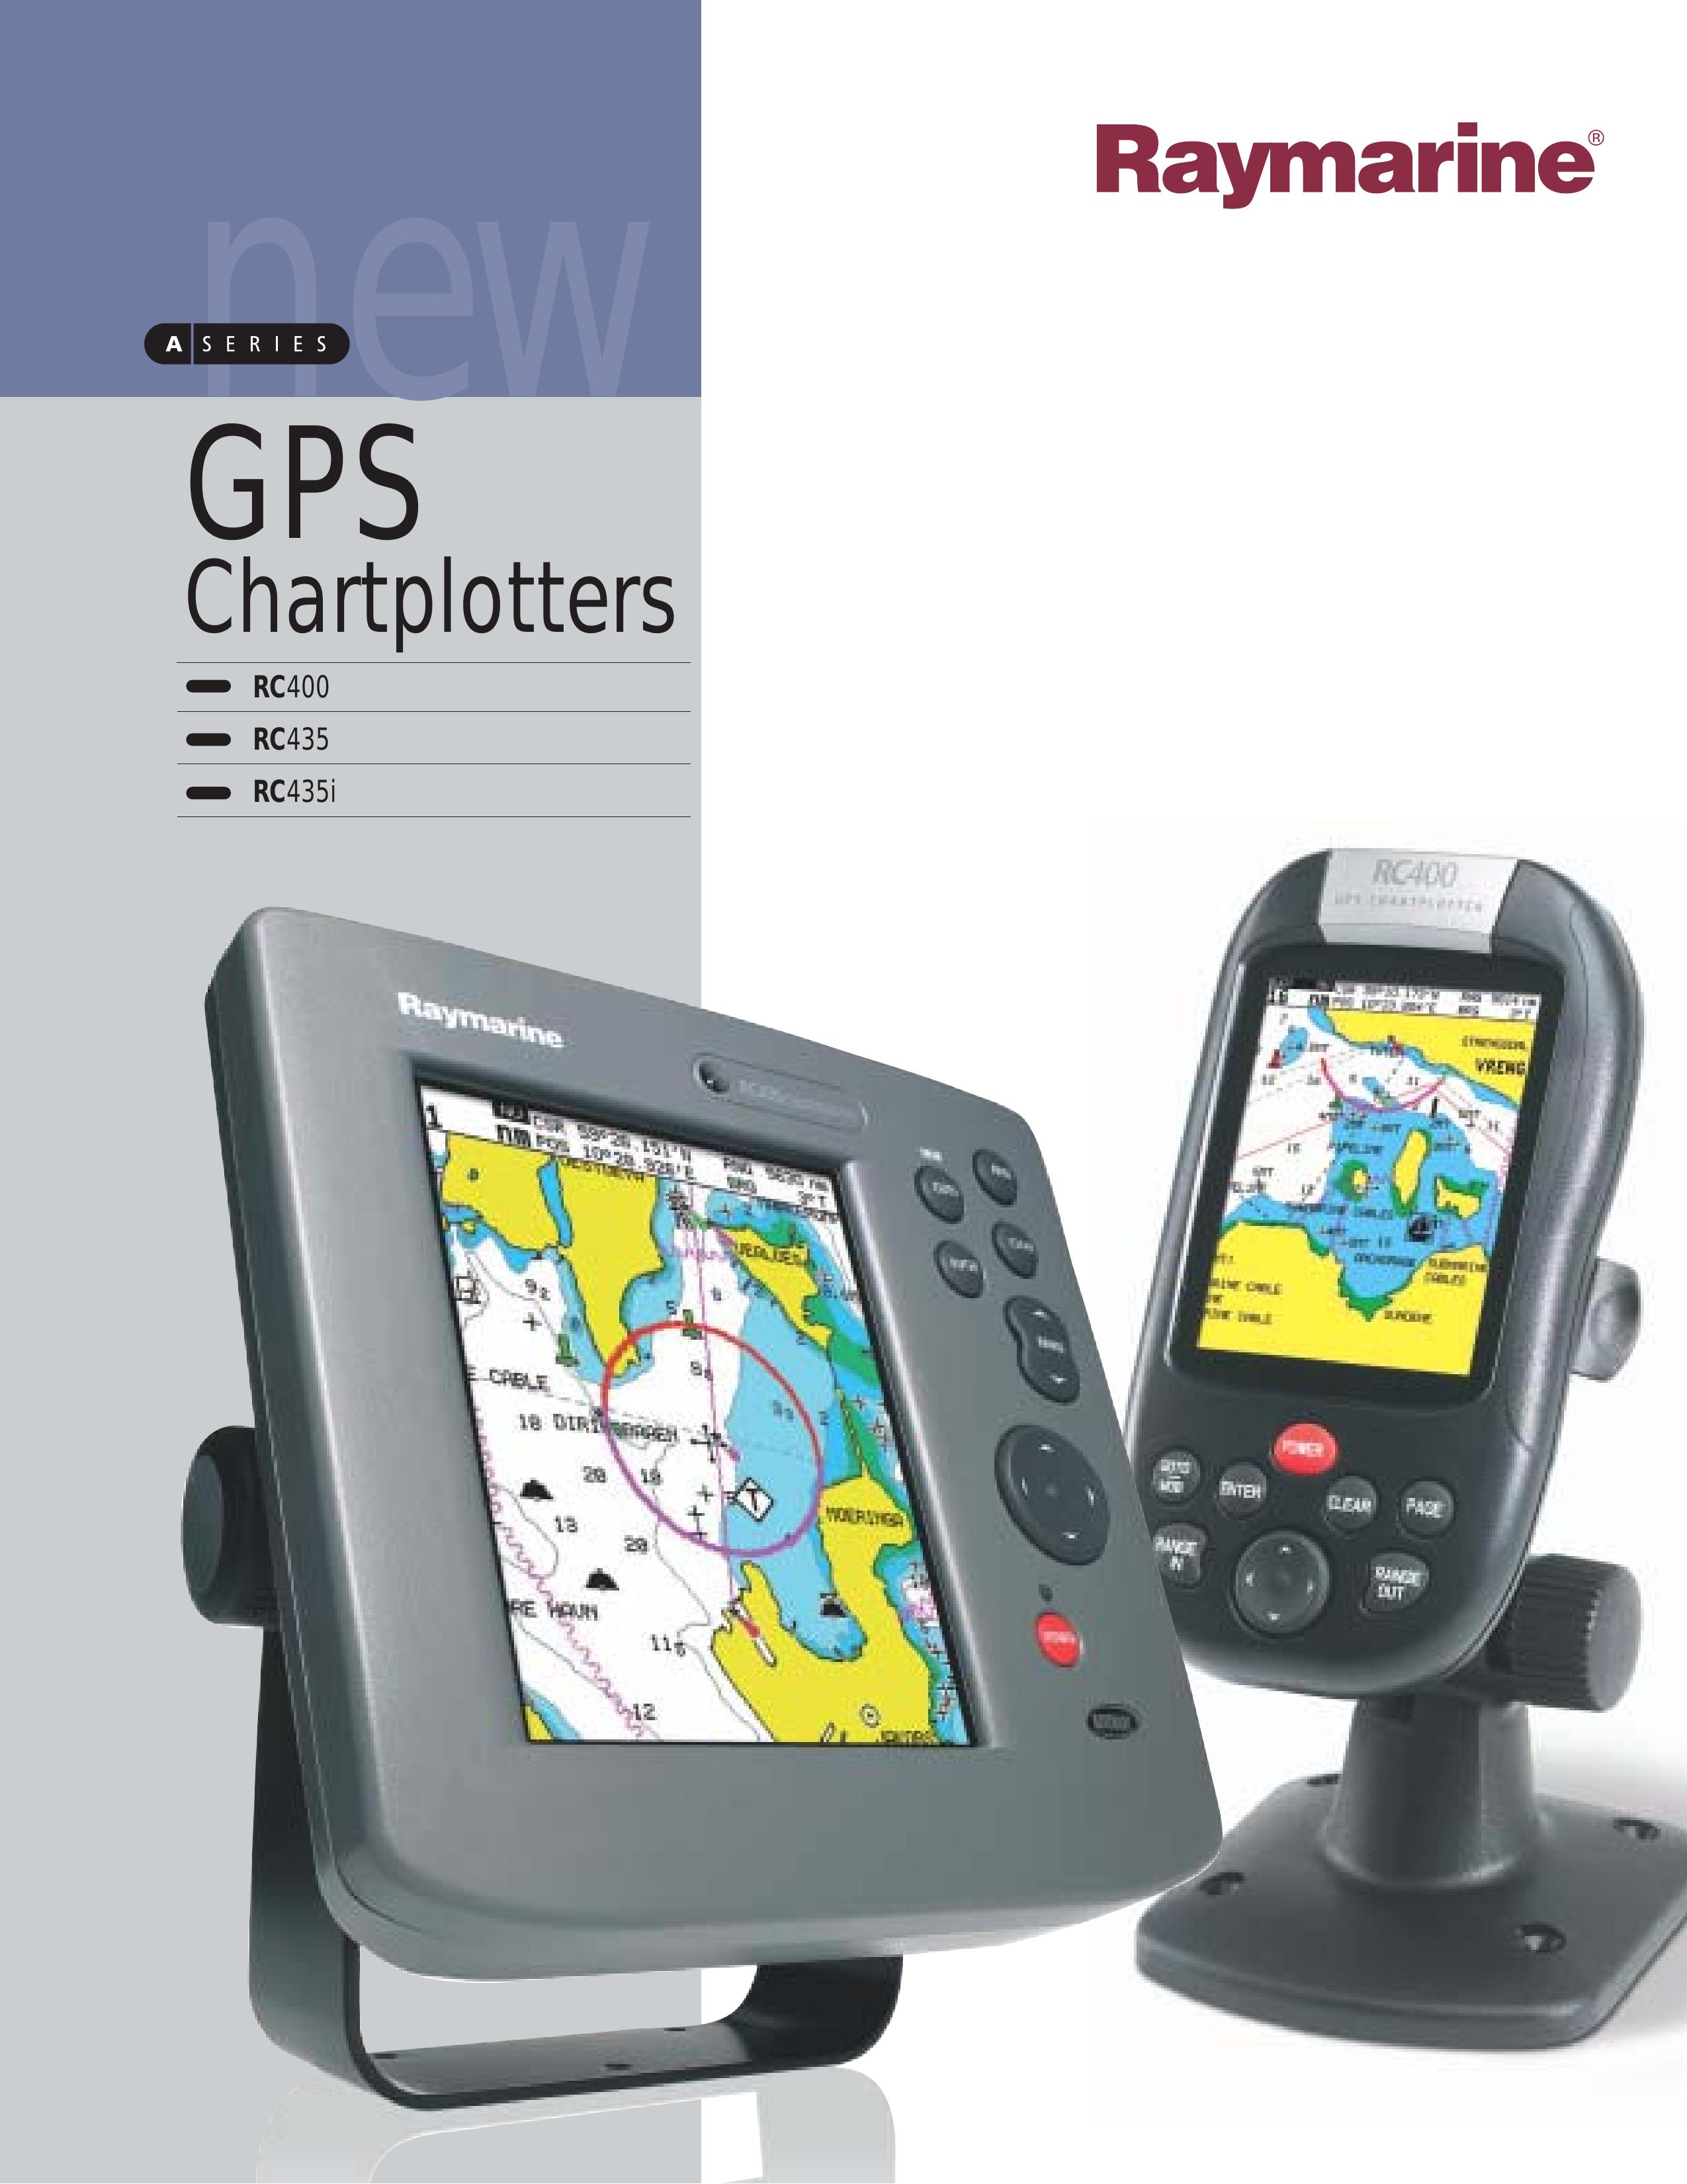 Raymarine RC435i Marine GPS System User Manual